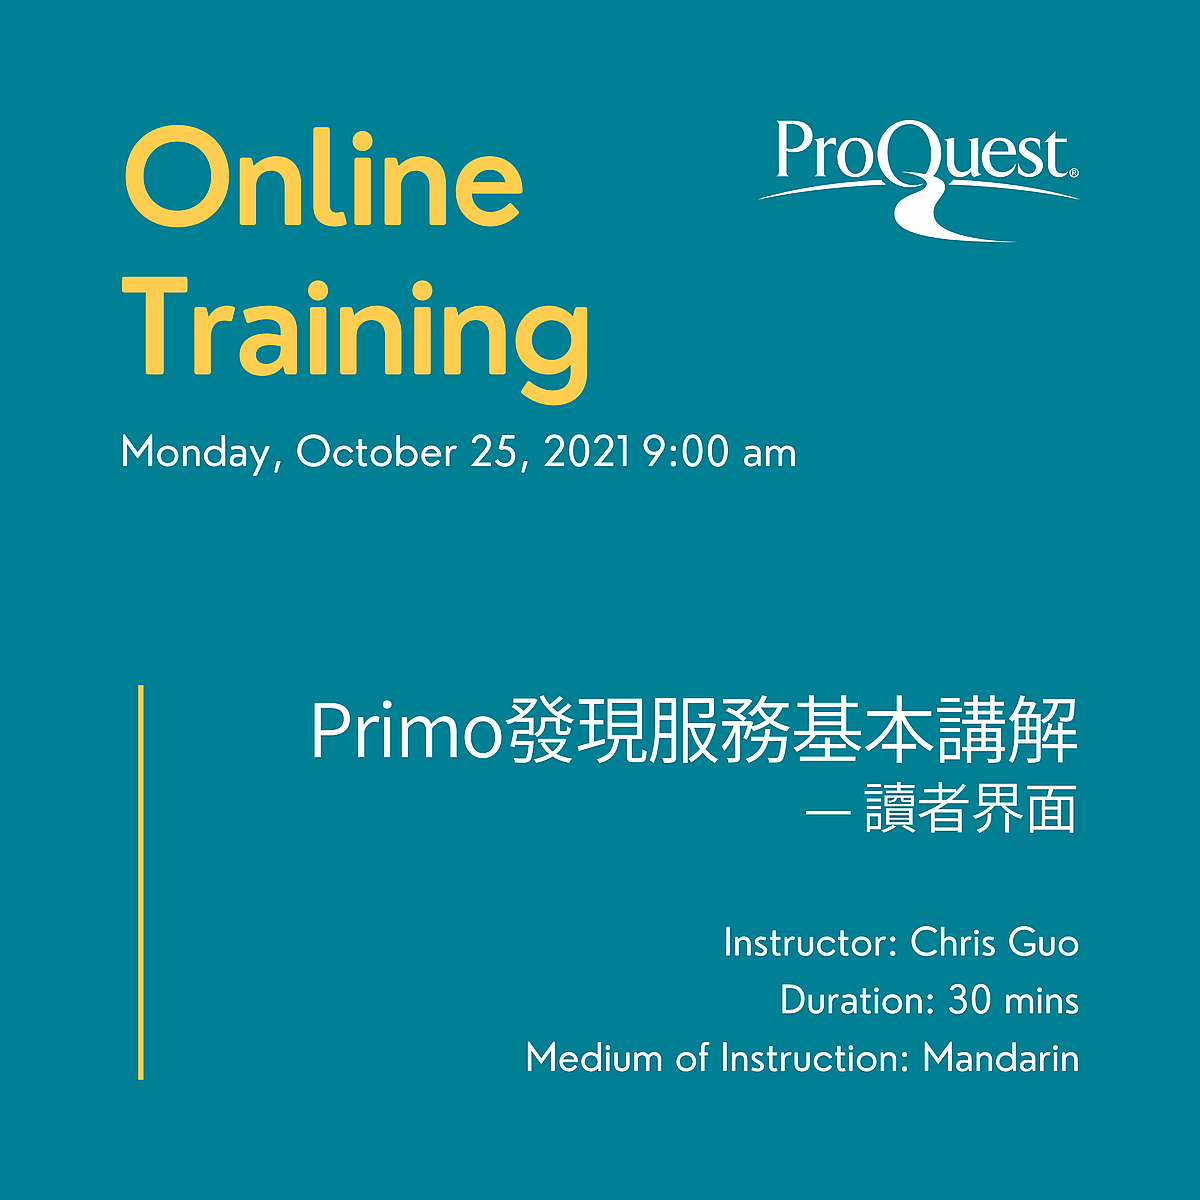 ProQuest Online Training: Primo 發現服務基本講解 — 讀者界面